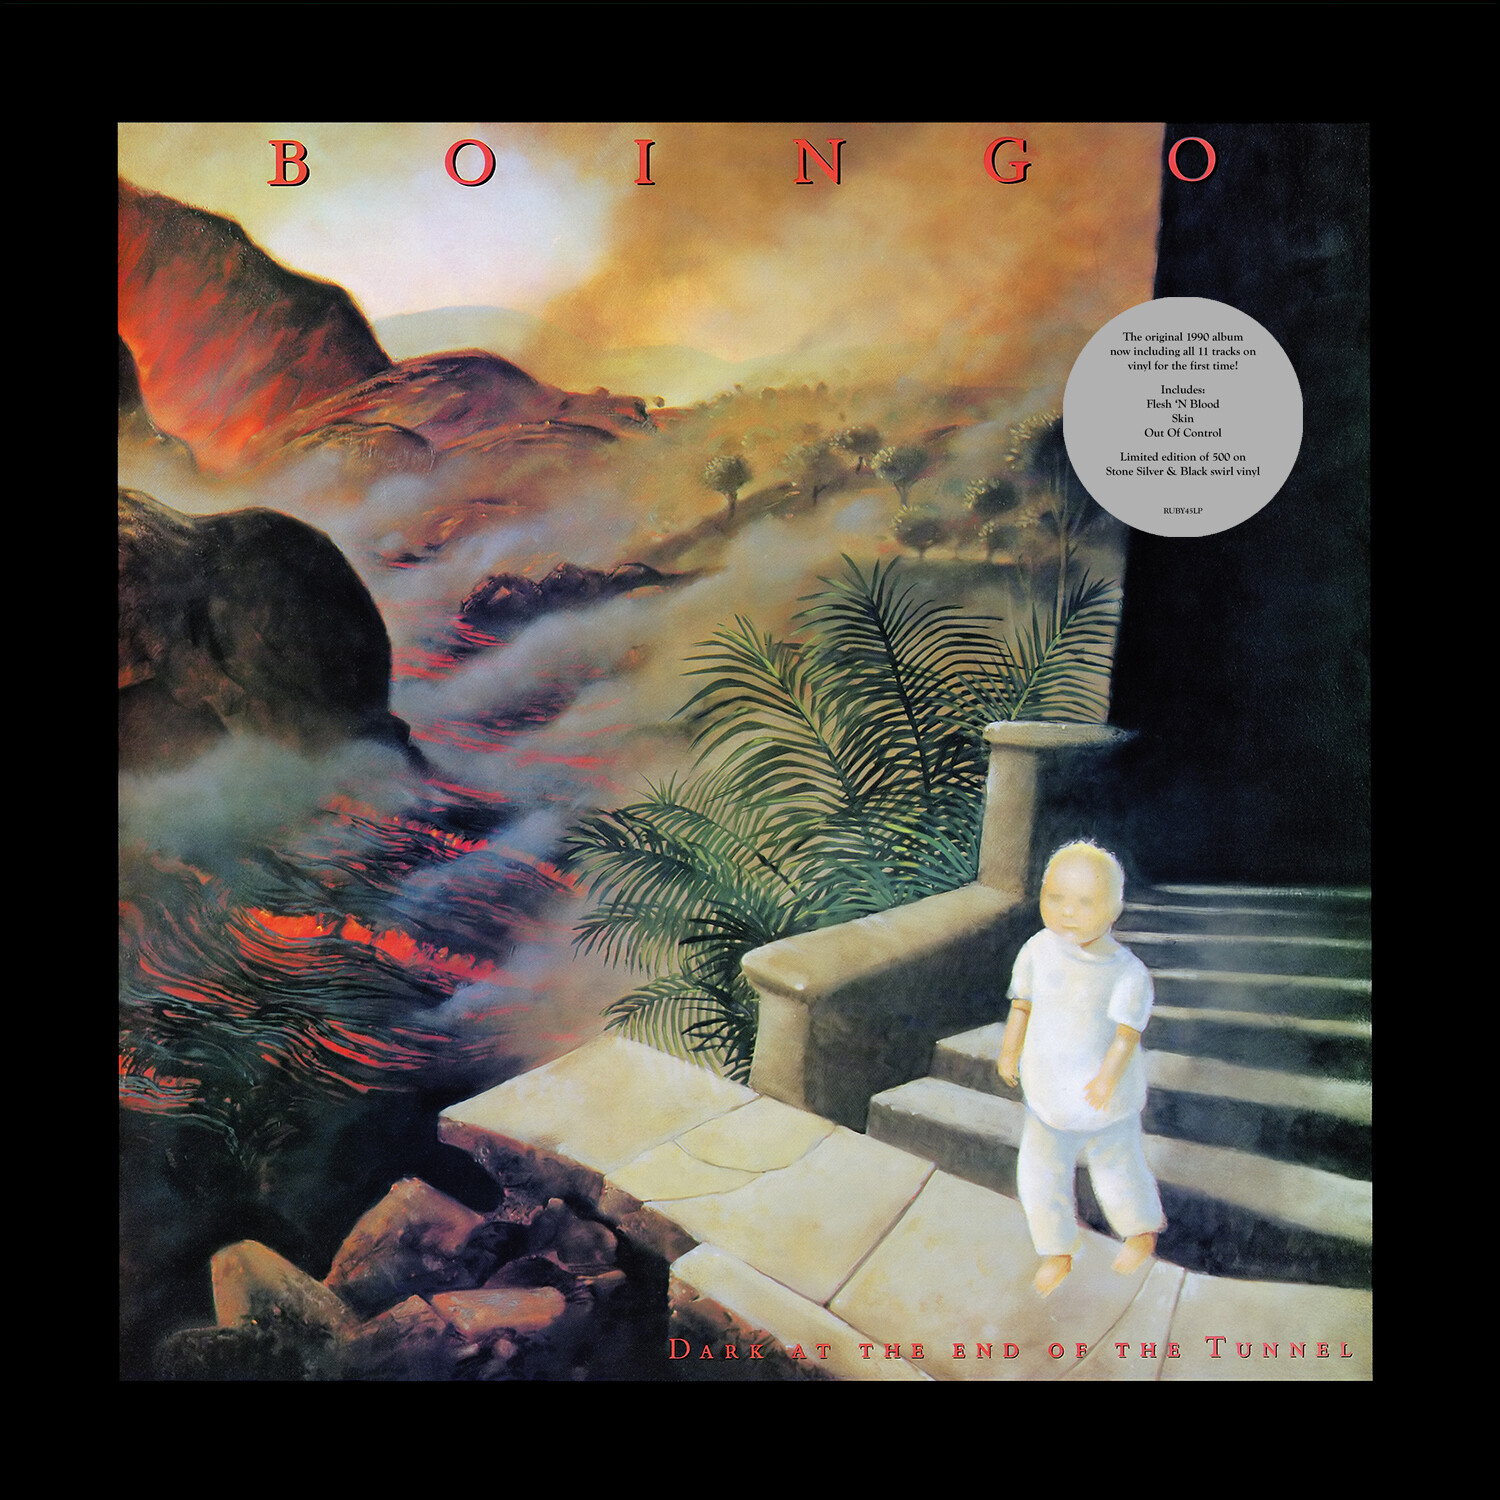 Oingo Boingo / Dark At The End Of The Tunnel LP: Silver & Black vinyl